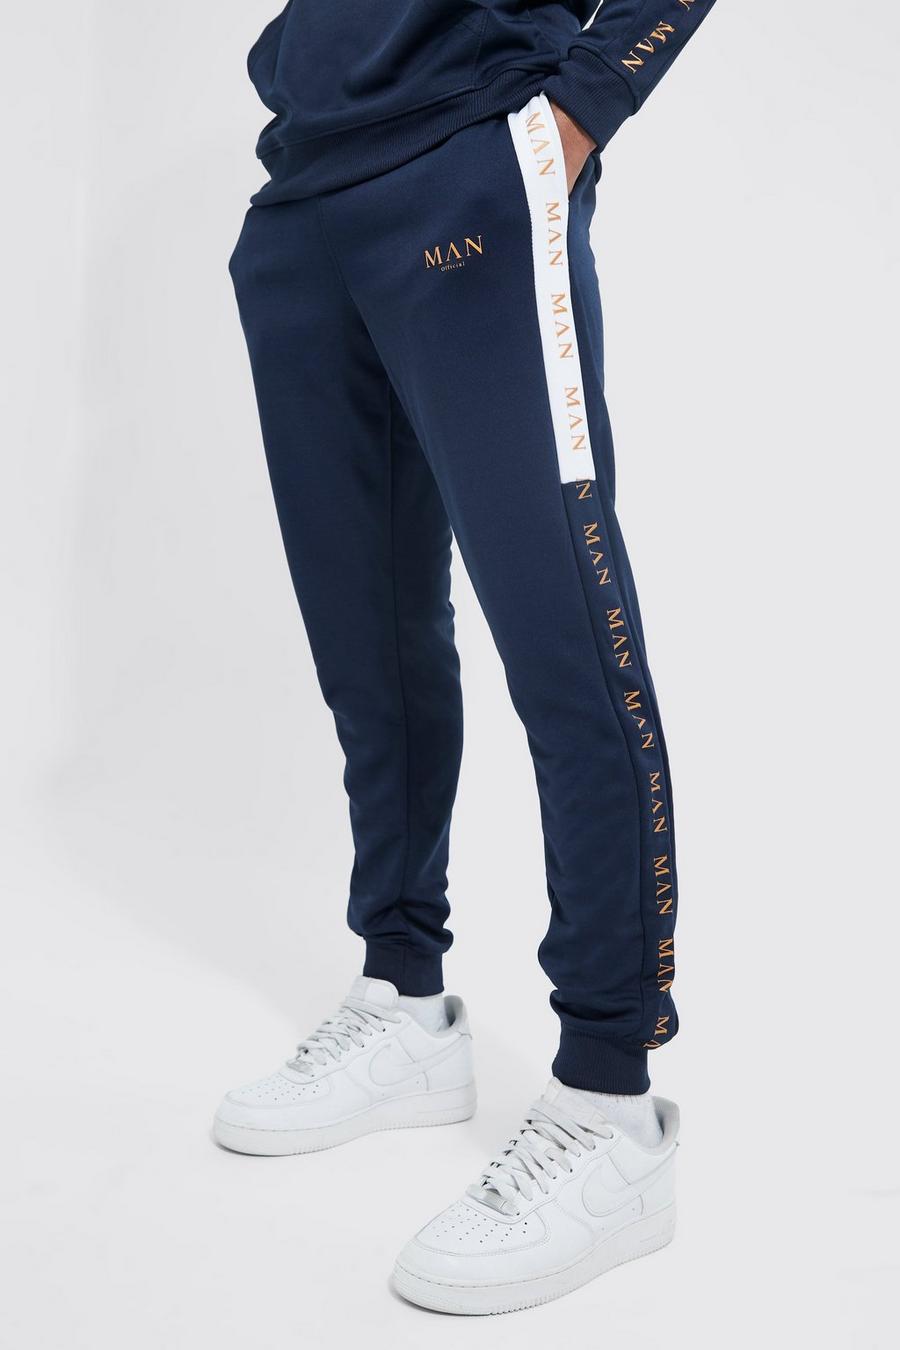 Pantaloni tuta Man Gold in tricot Skinny Fit con pannelli laterali, Navy